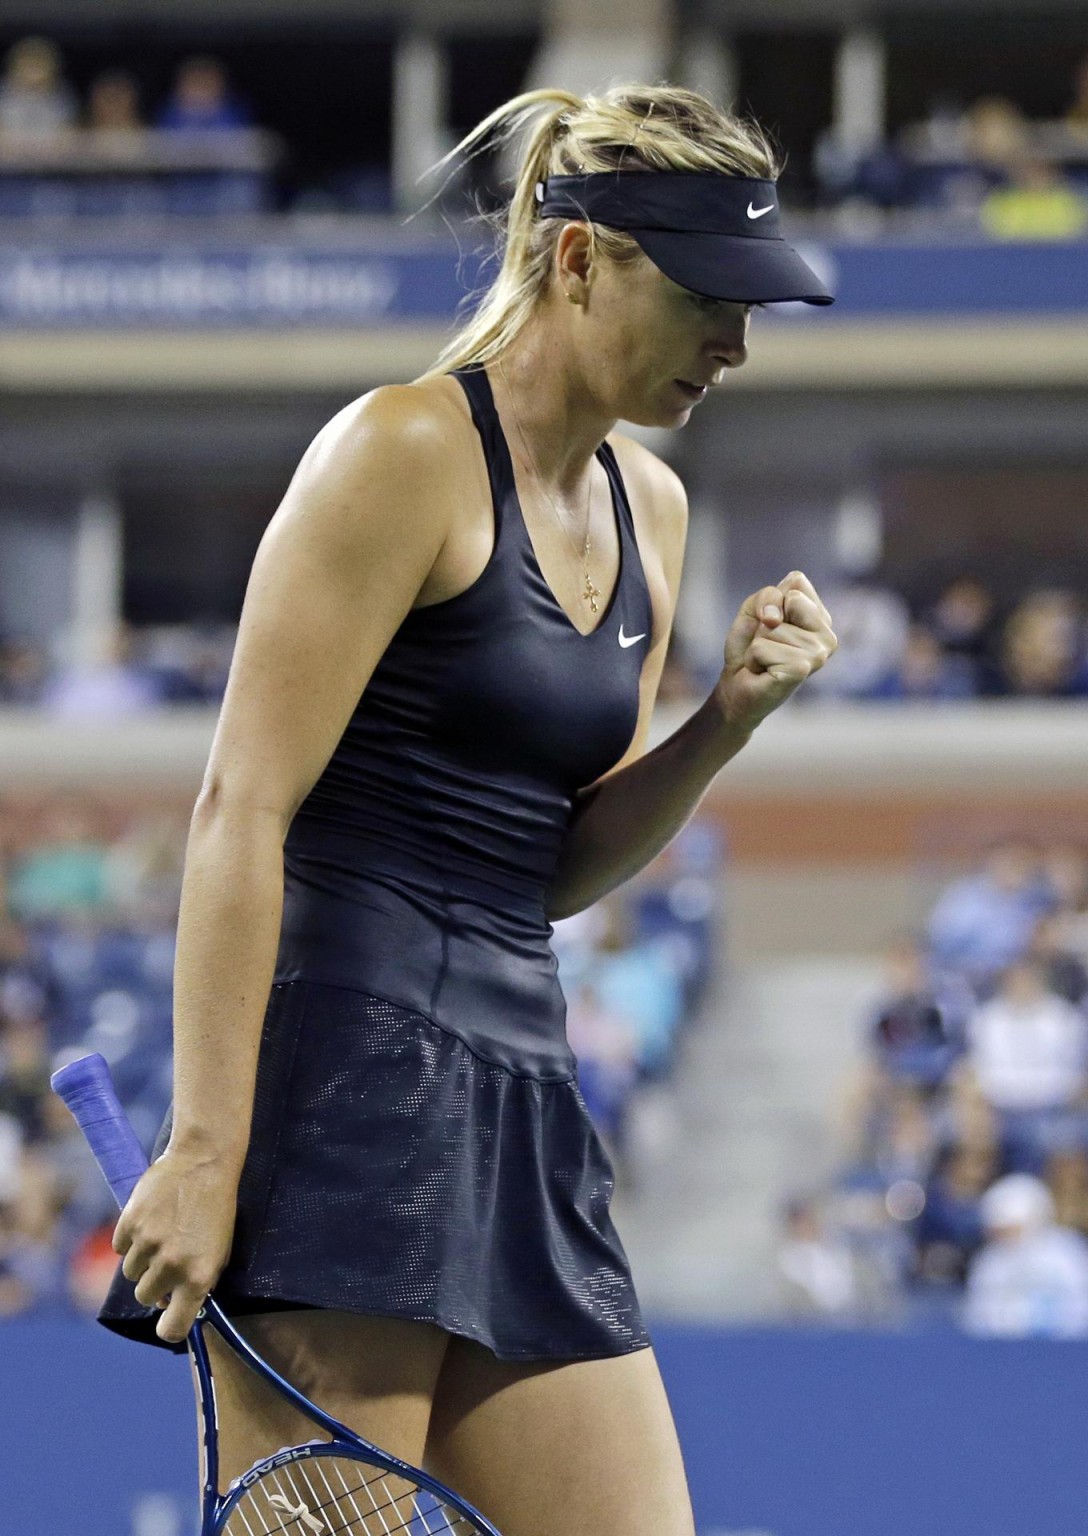 Maria Sharapova upskirt at the US Open in New York #75186967